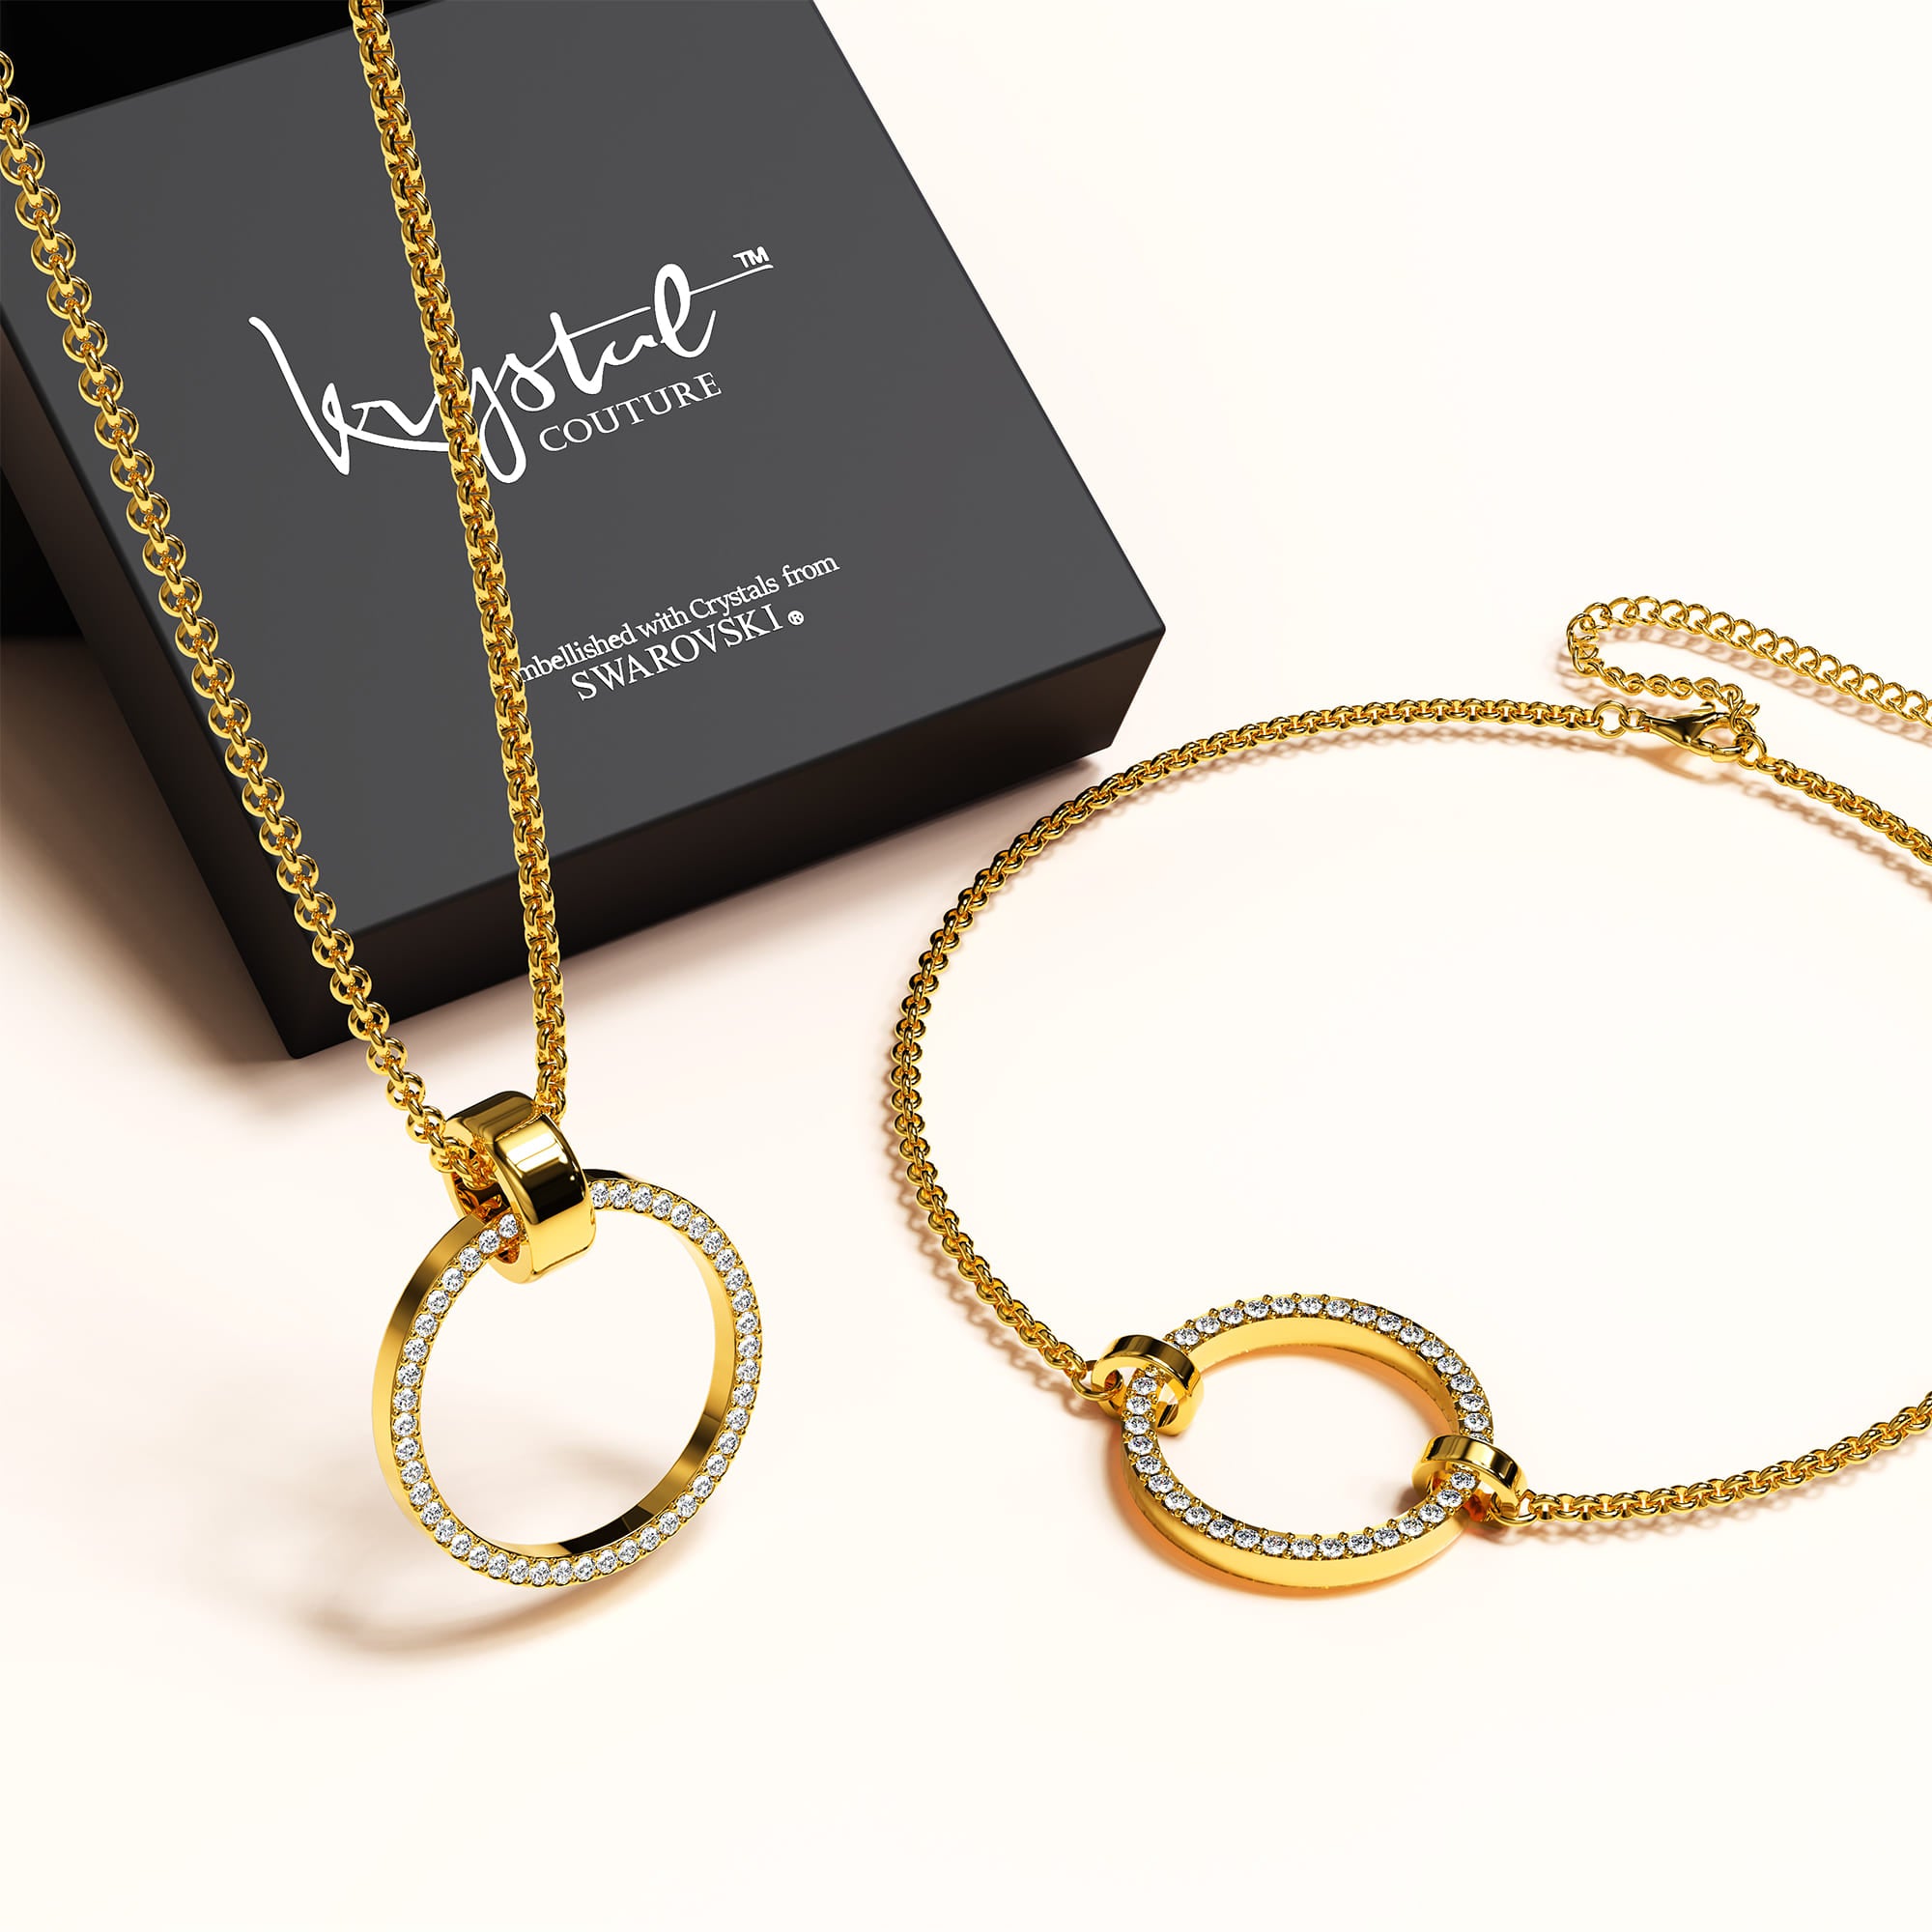 Boxed Orbit Beauty Bracelet & Charm Necklace Set with SWAROVSKI® Crystal in Gold